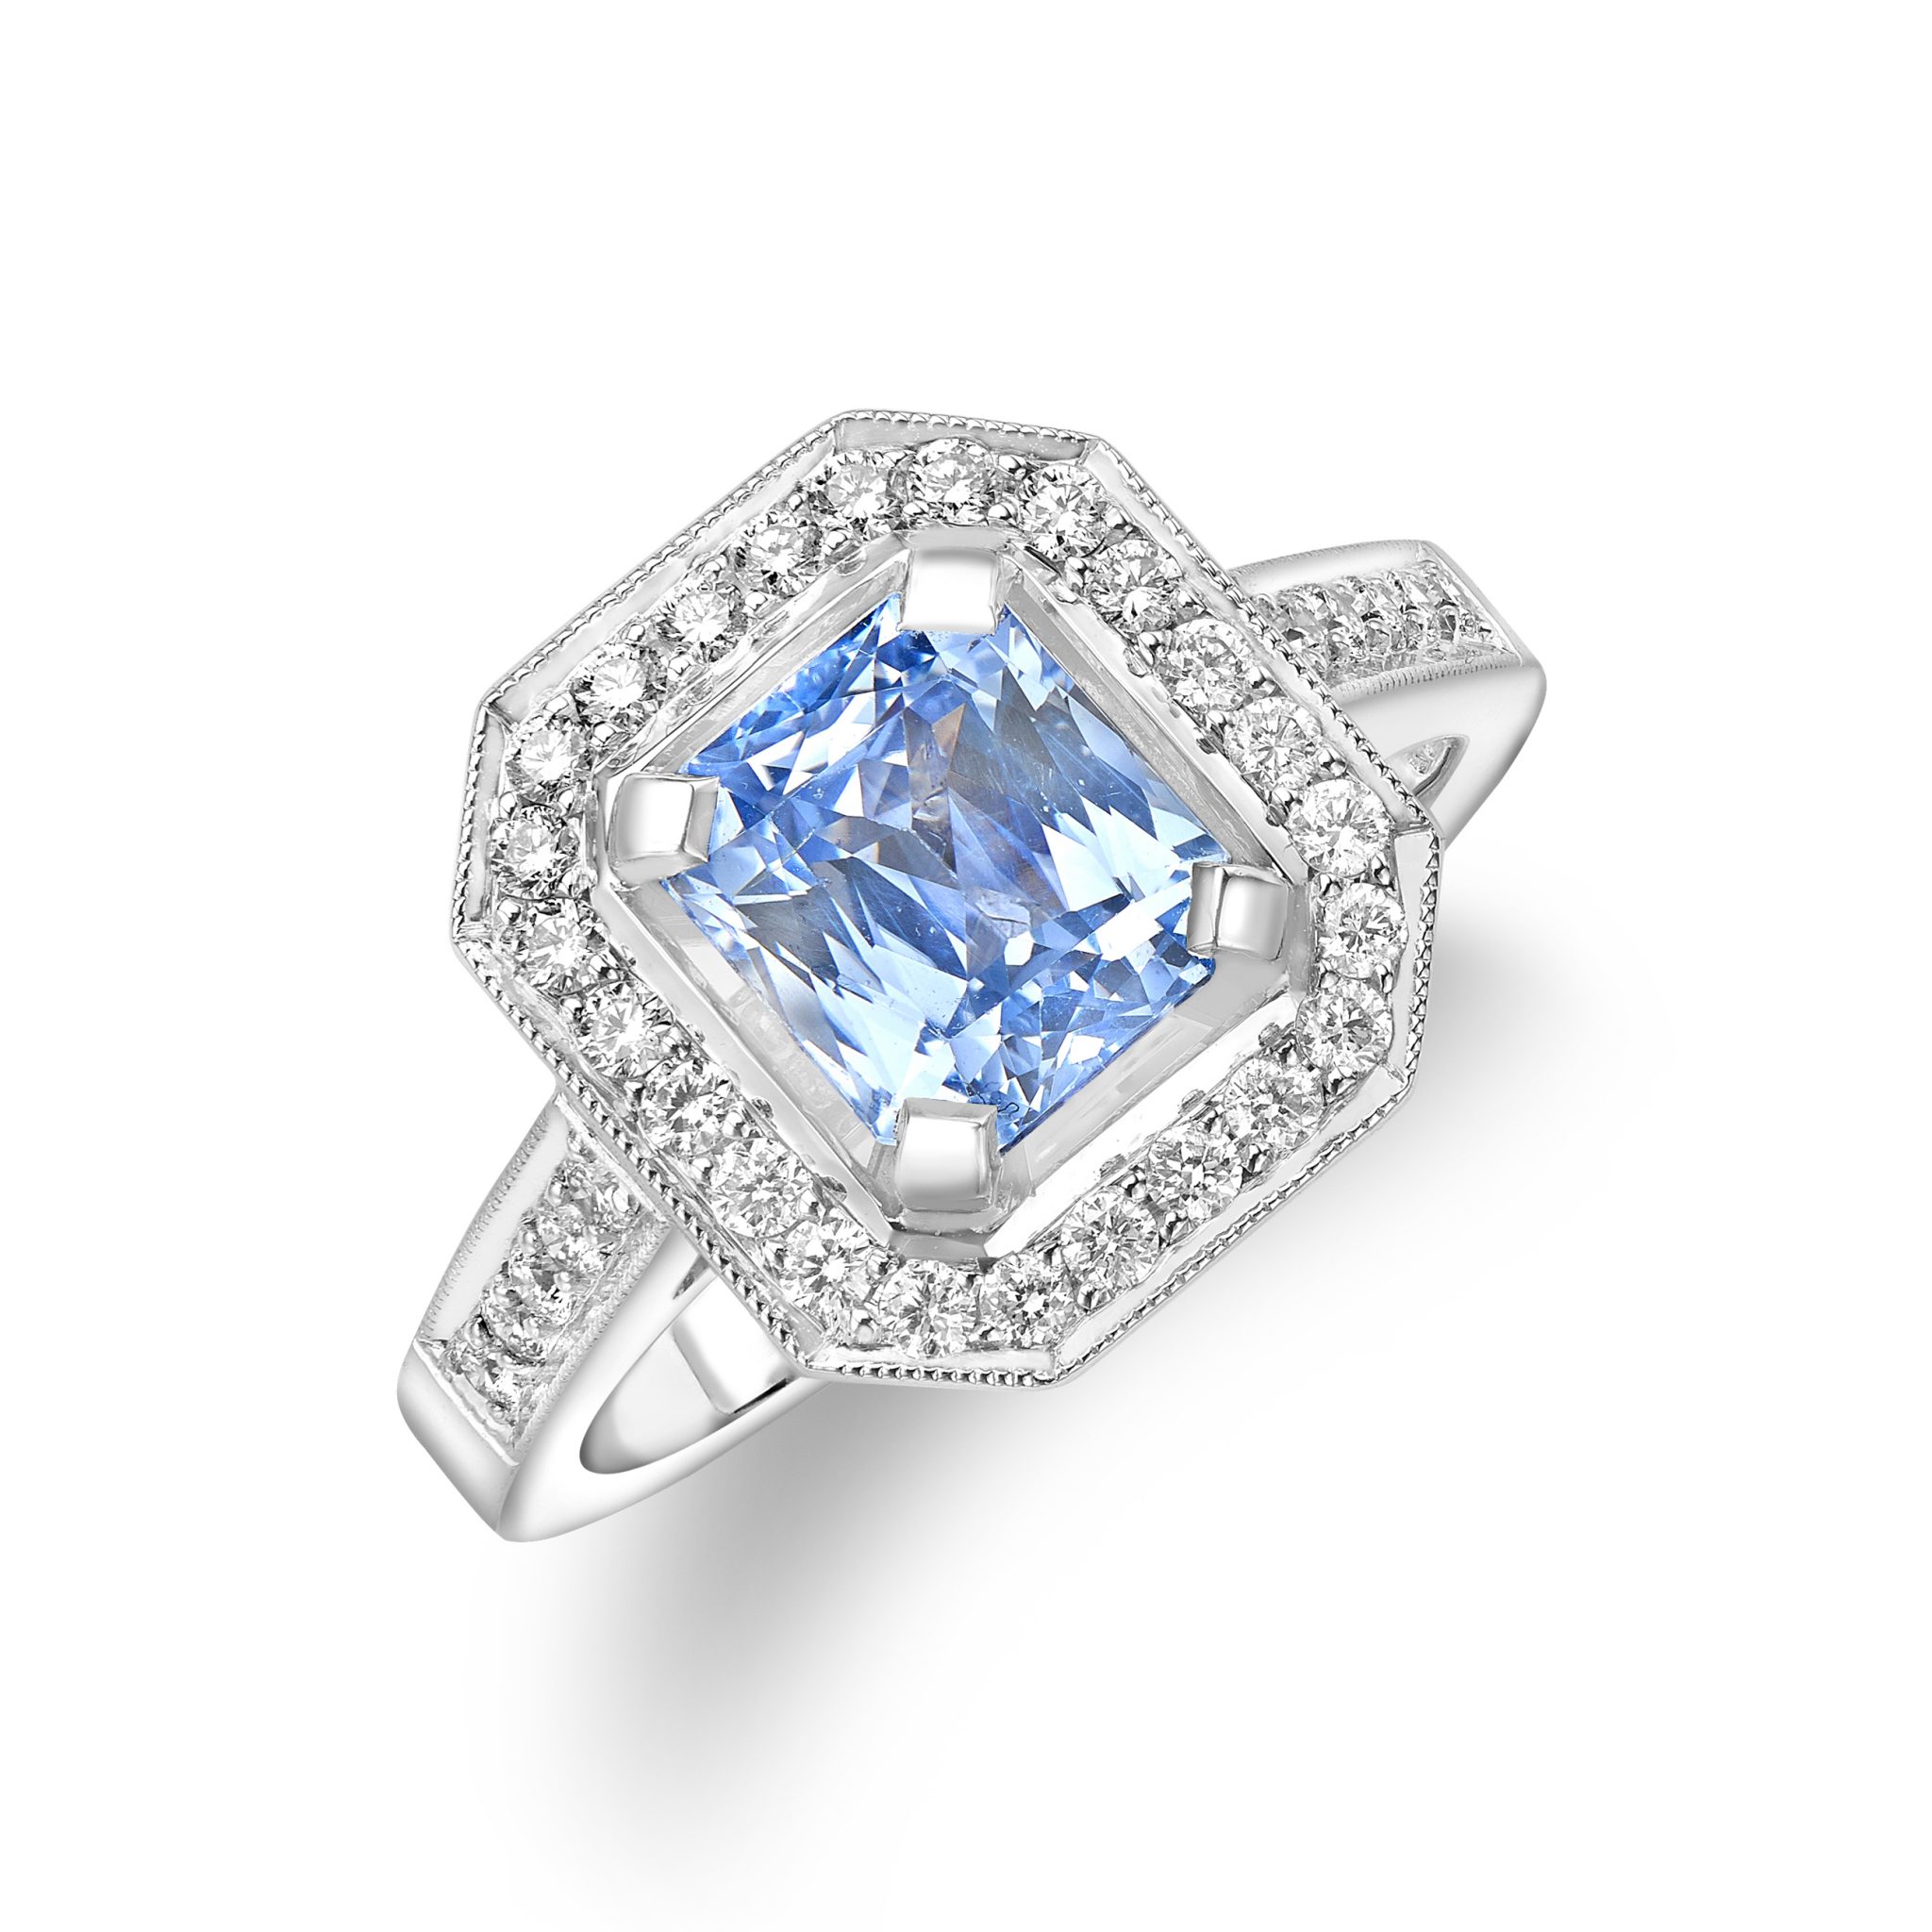 Light blue octagon shaped sapphire